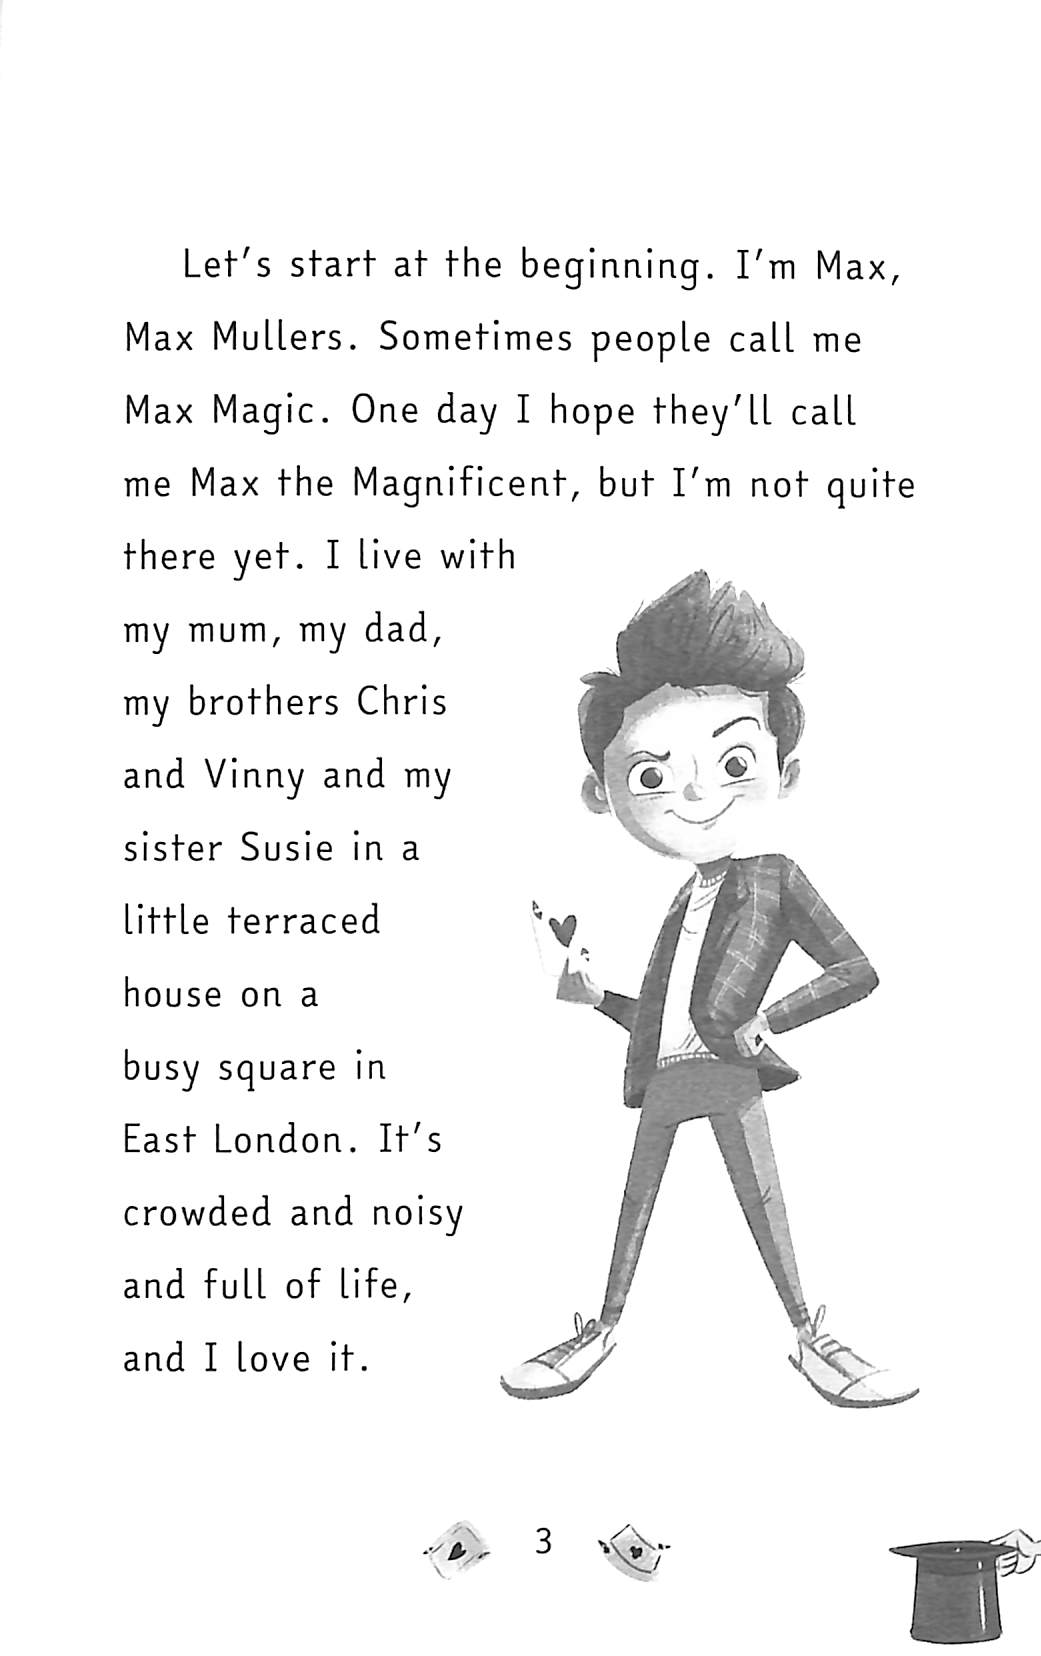 Max Magic by Stephen Mulhern